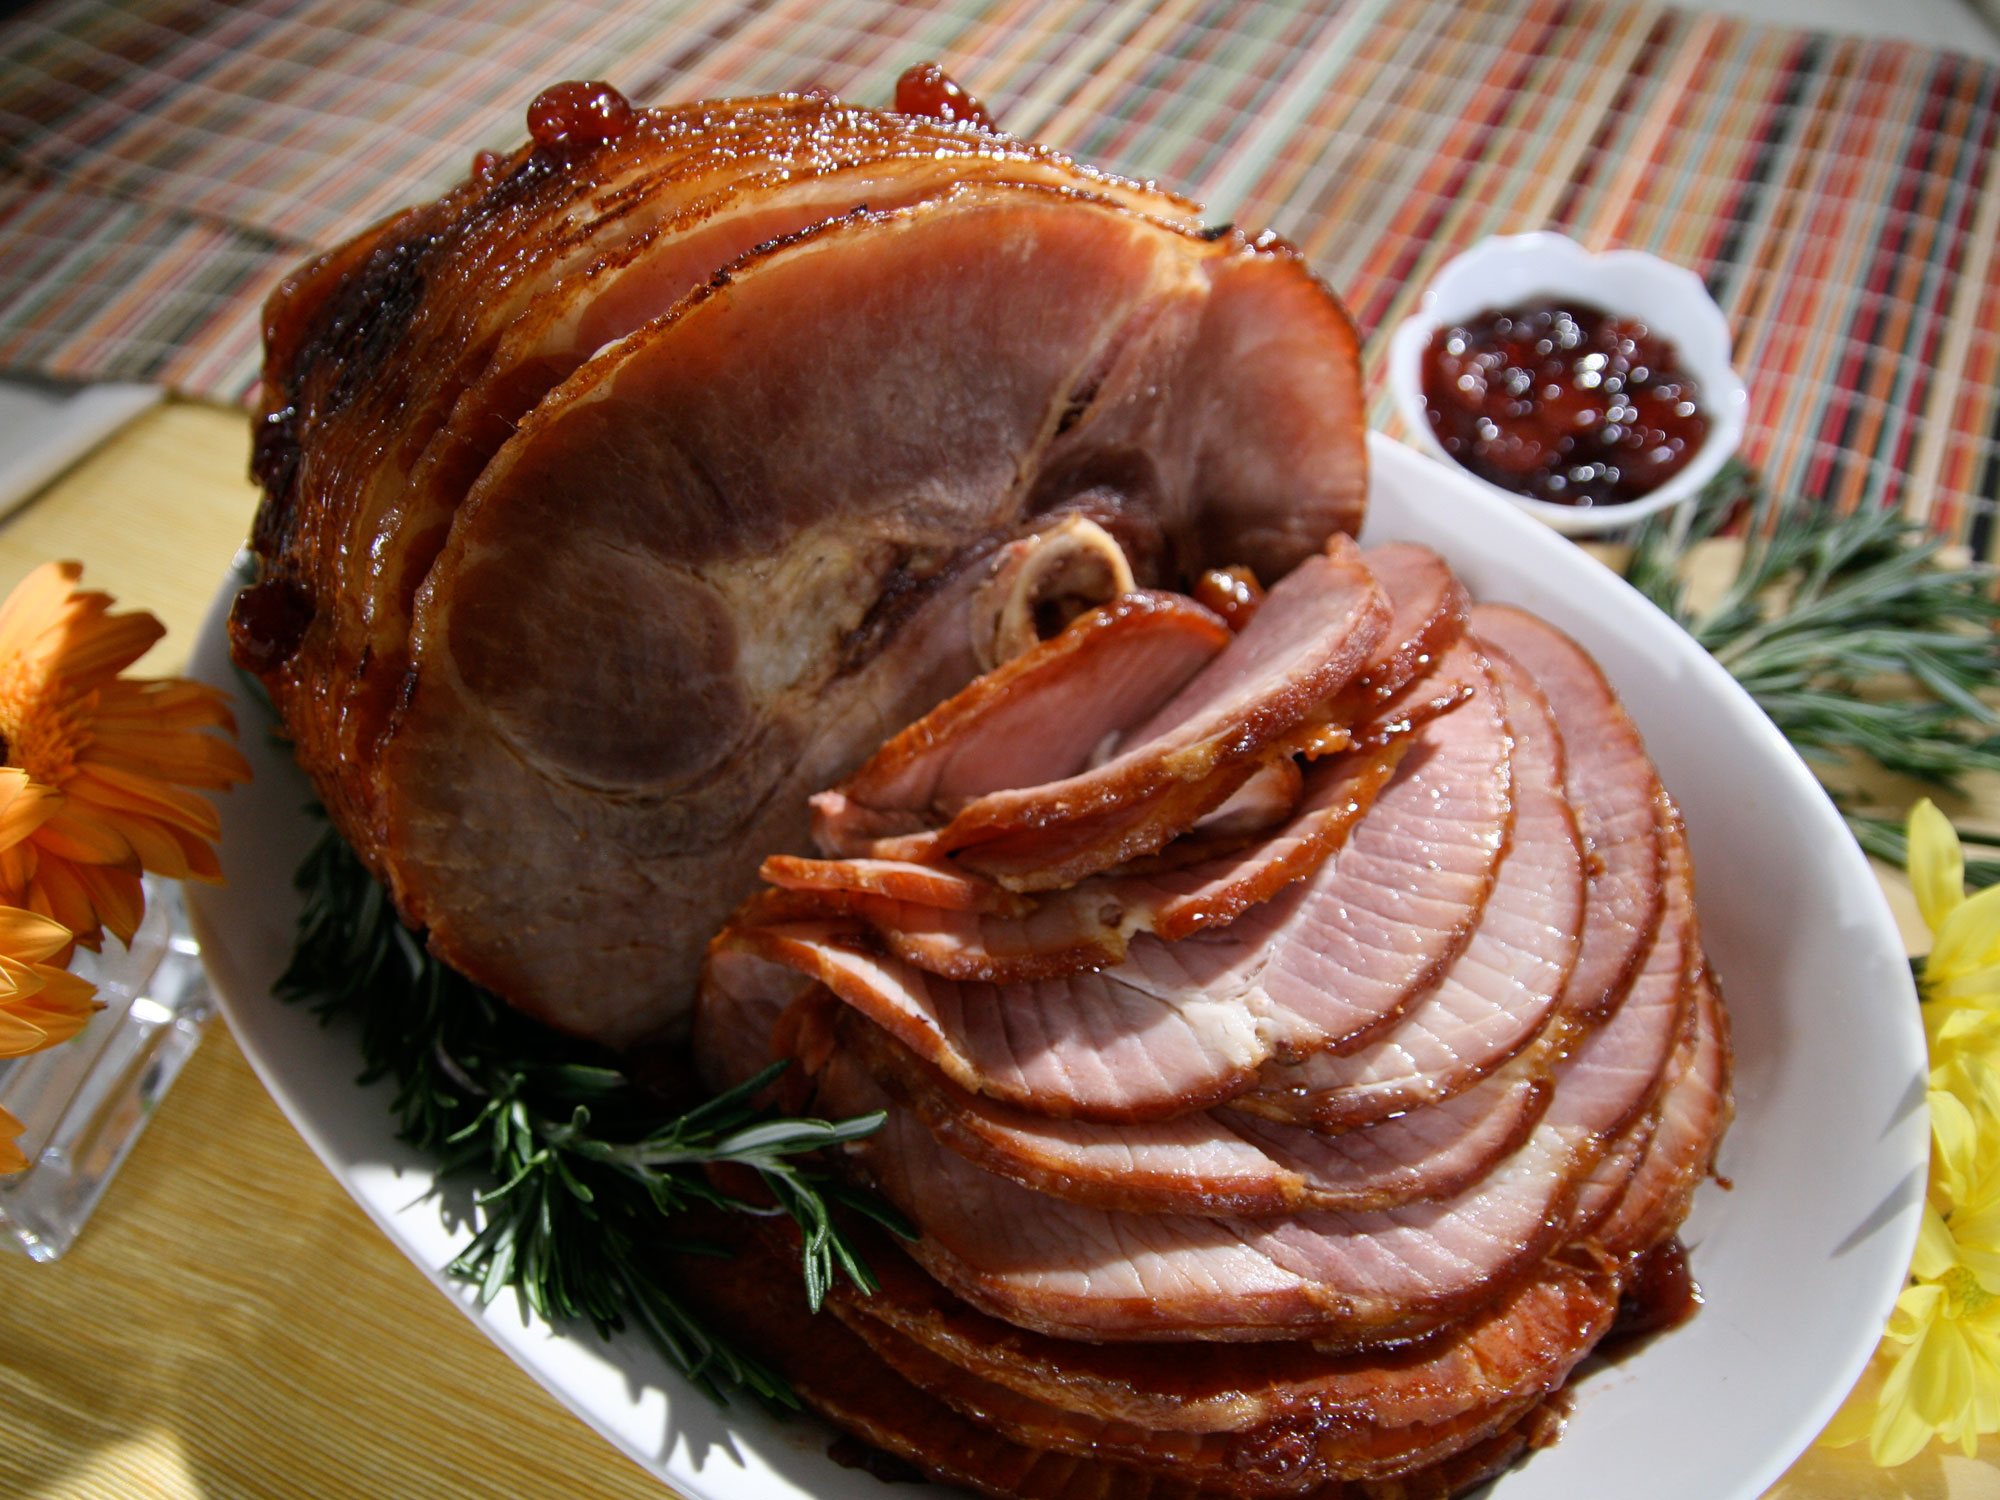 Holiday Spiced Glazed Ham Recipe - Serendipity And Spice